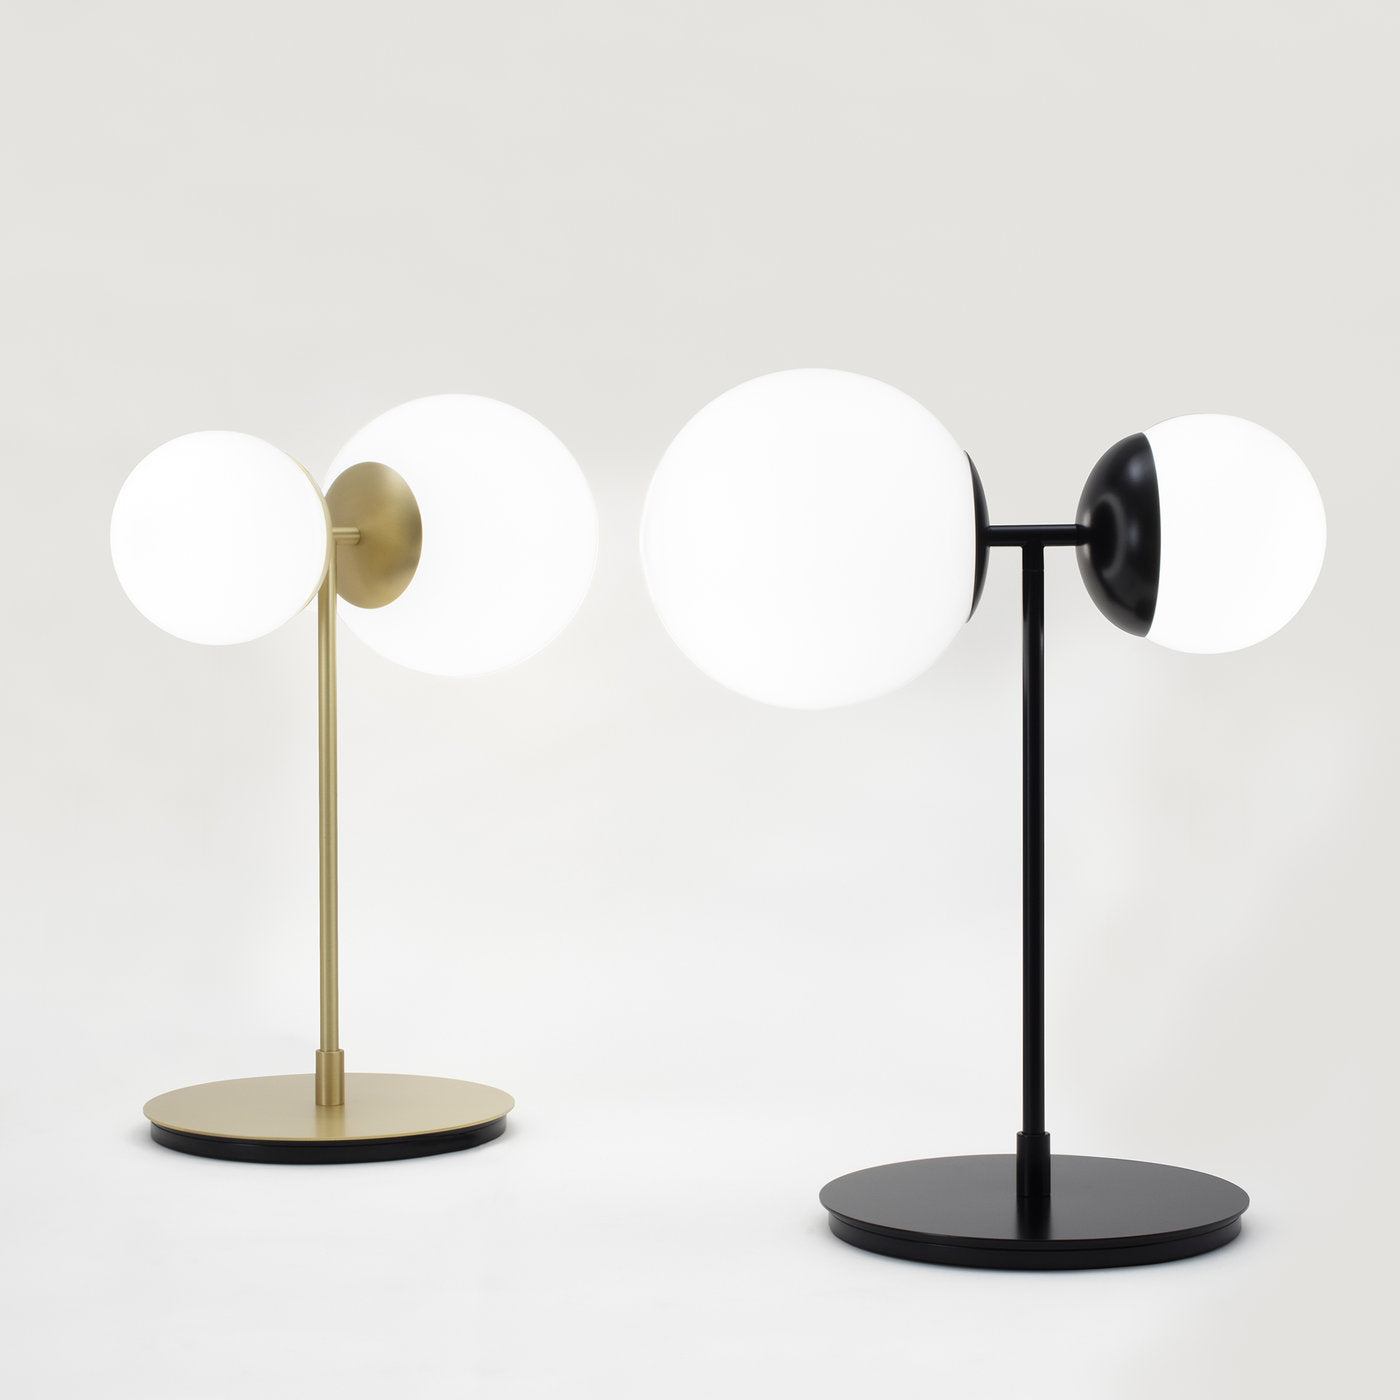 Biba Table Lamp by Lorenza Bozzoli - Alternative view 1